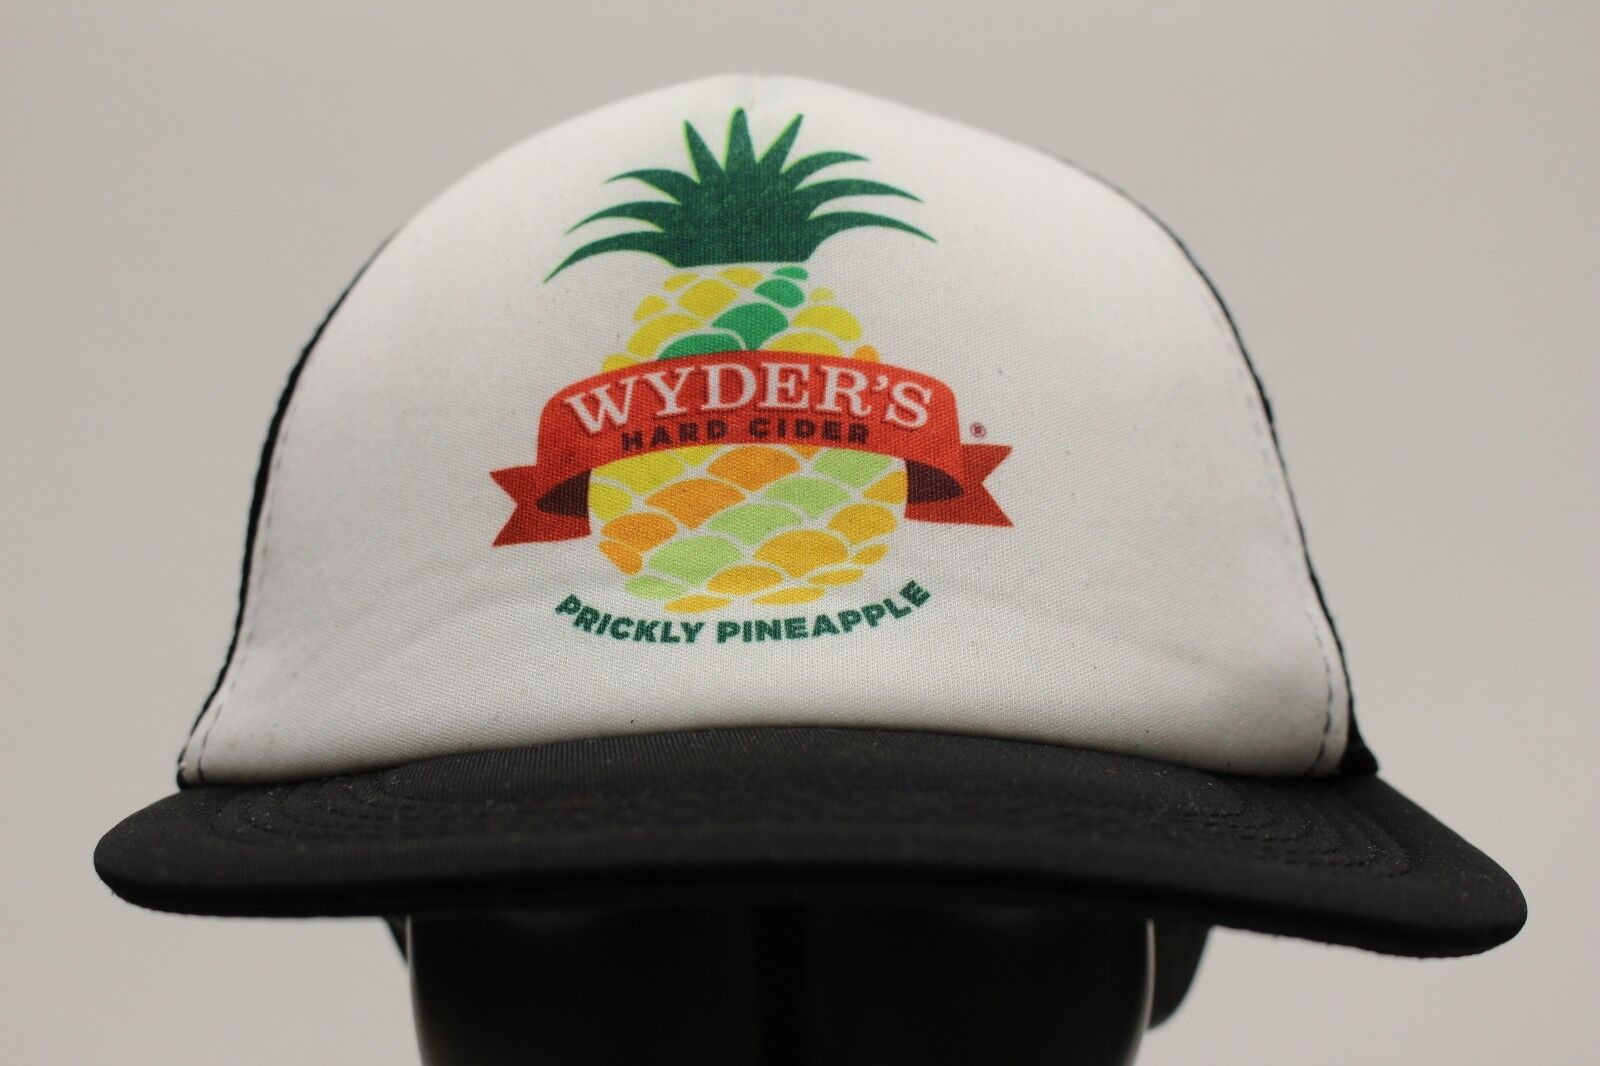 WYDER\'S HARD CIDER -PRICKLY PINEAPPLE - TRUCKER STYLE ADJUSTABLE BALL CAP HAT